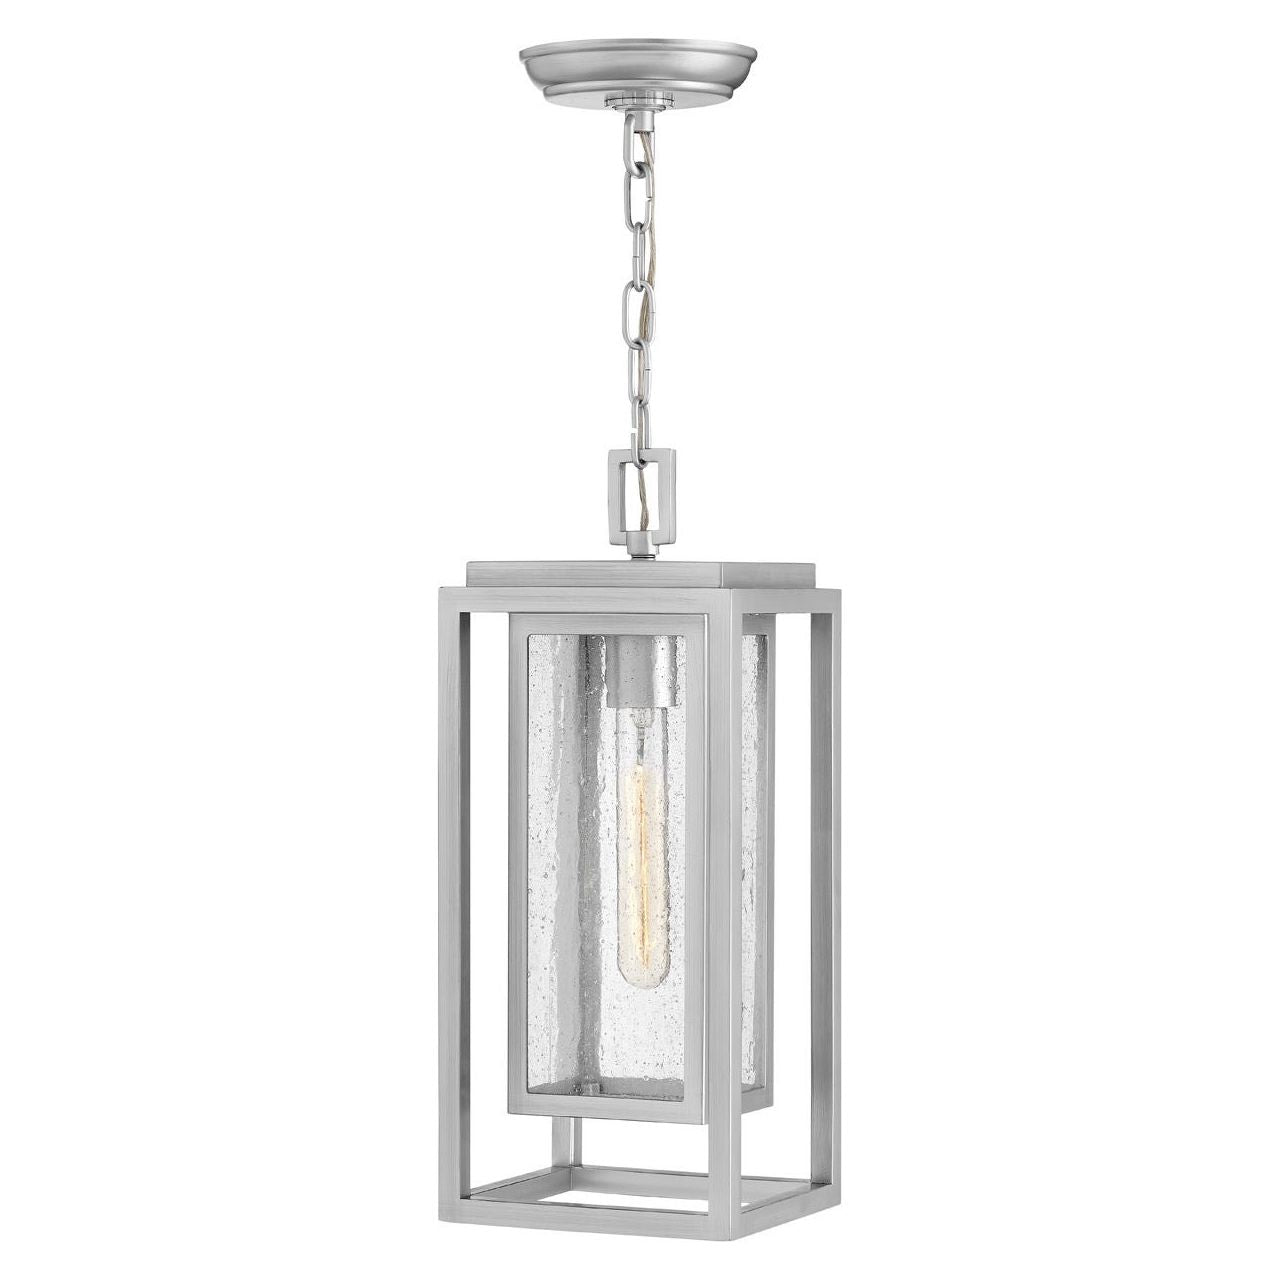 Republic 1-Light Medium Hanging Lantern